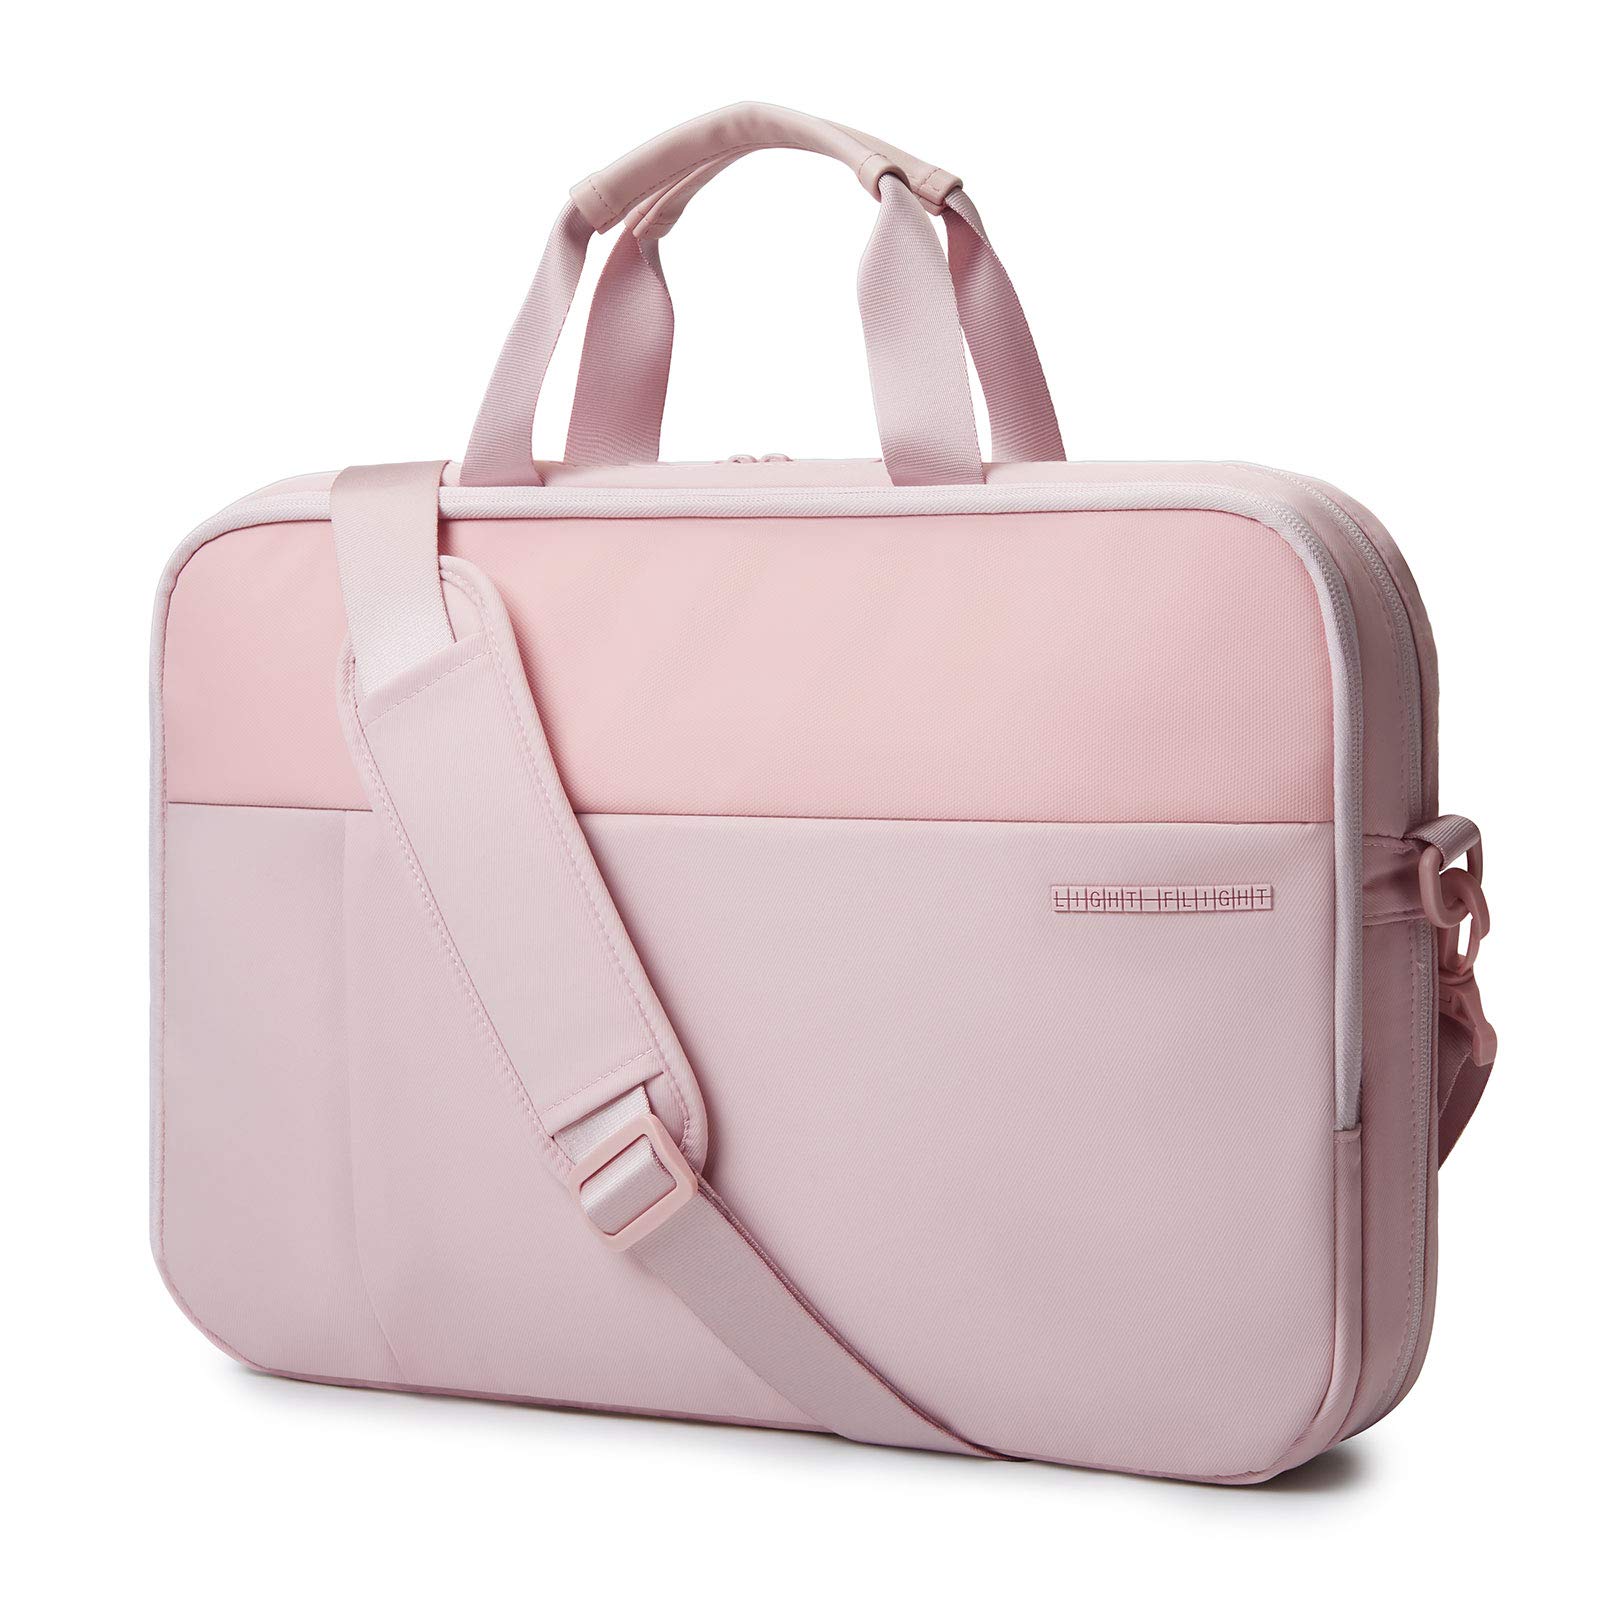 Vegan Leather Waterproof Laptop Bag | Pink, Blue or Gray | Multitasky